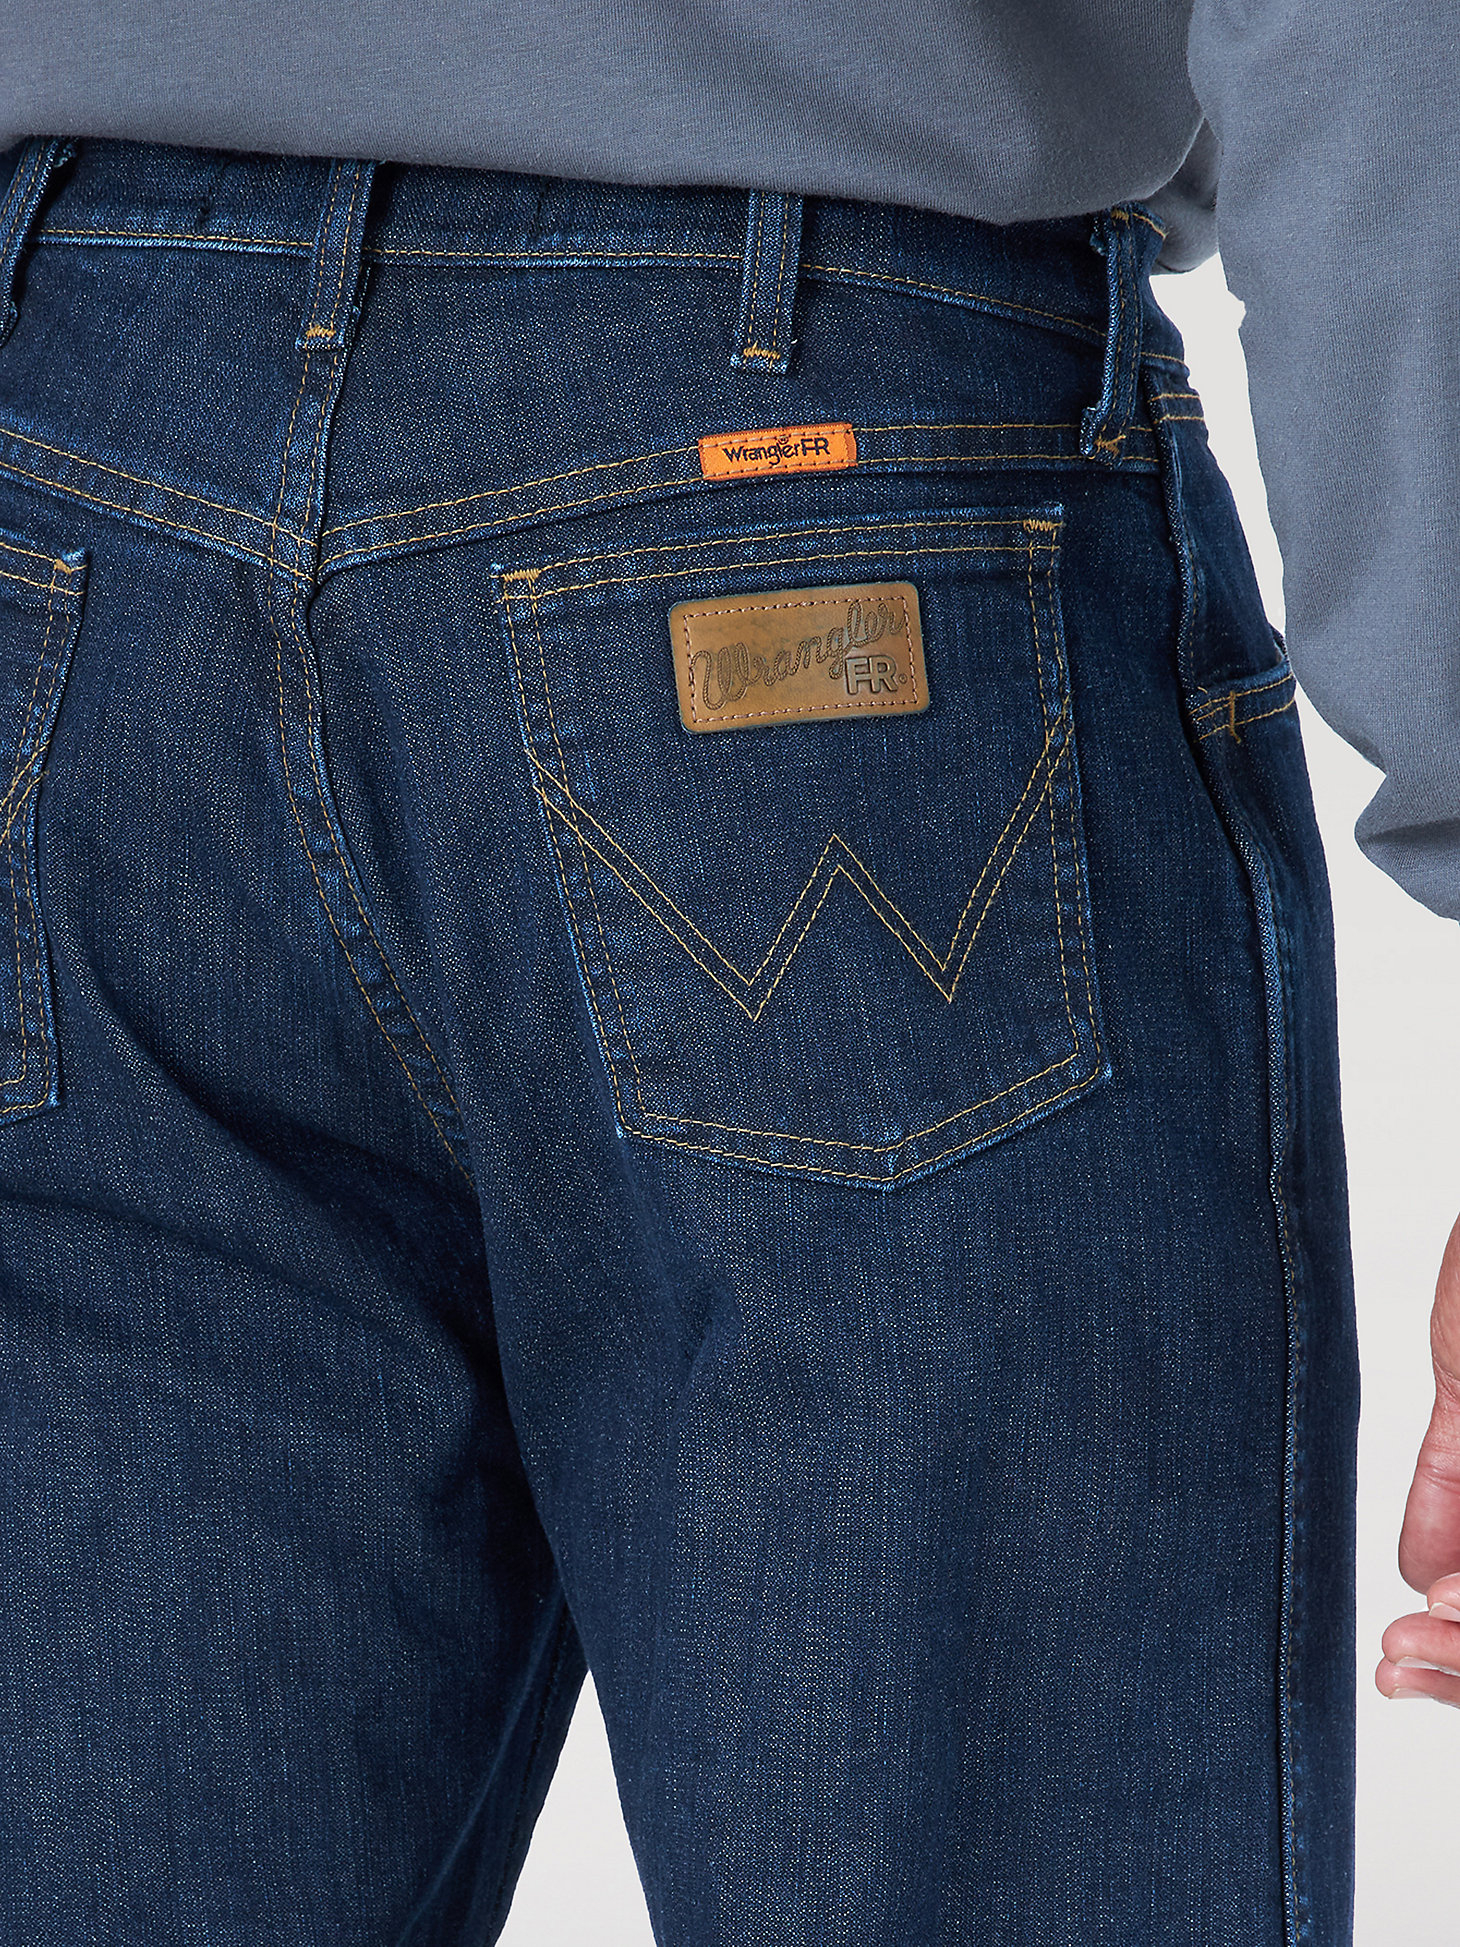 Wrangler® FR Flame Resistant Original Fit Jean in Dark Wash alternative view 3